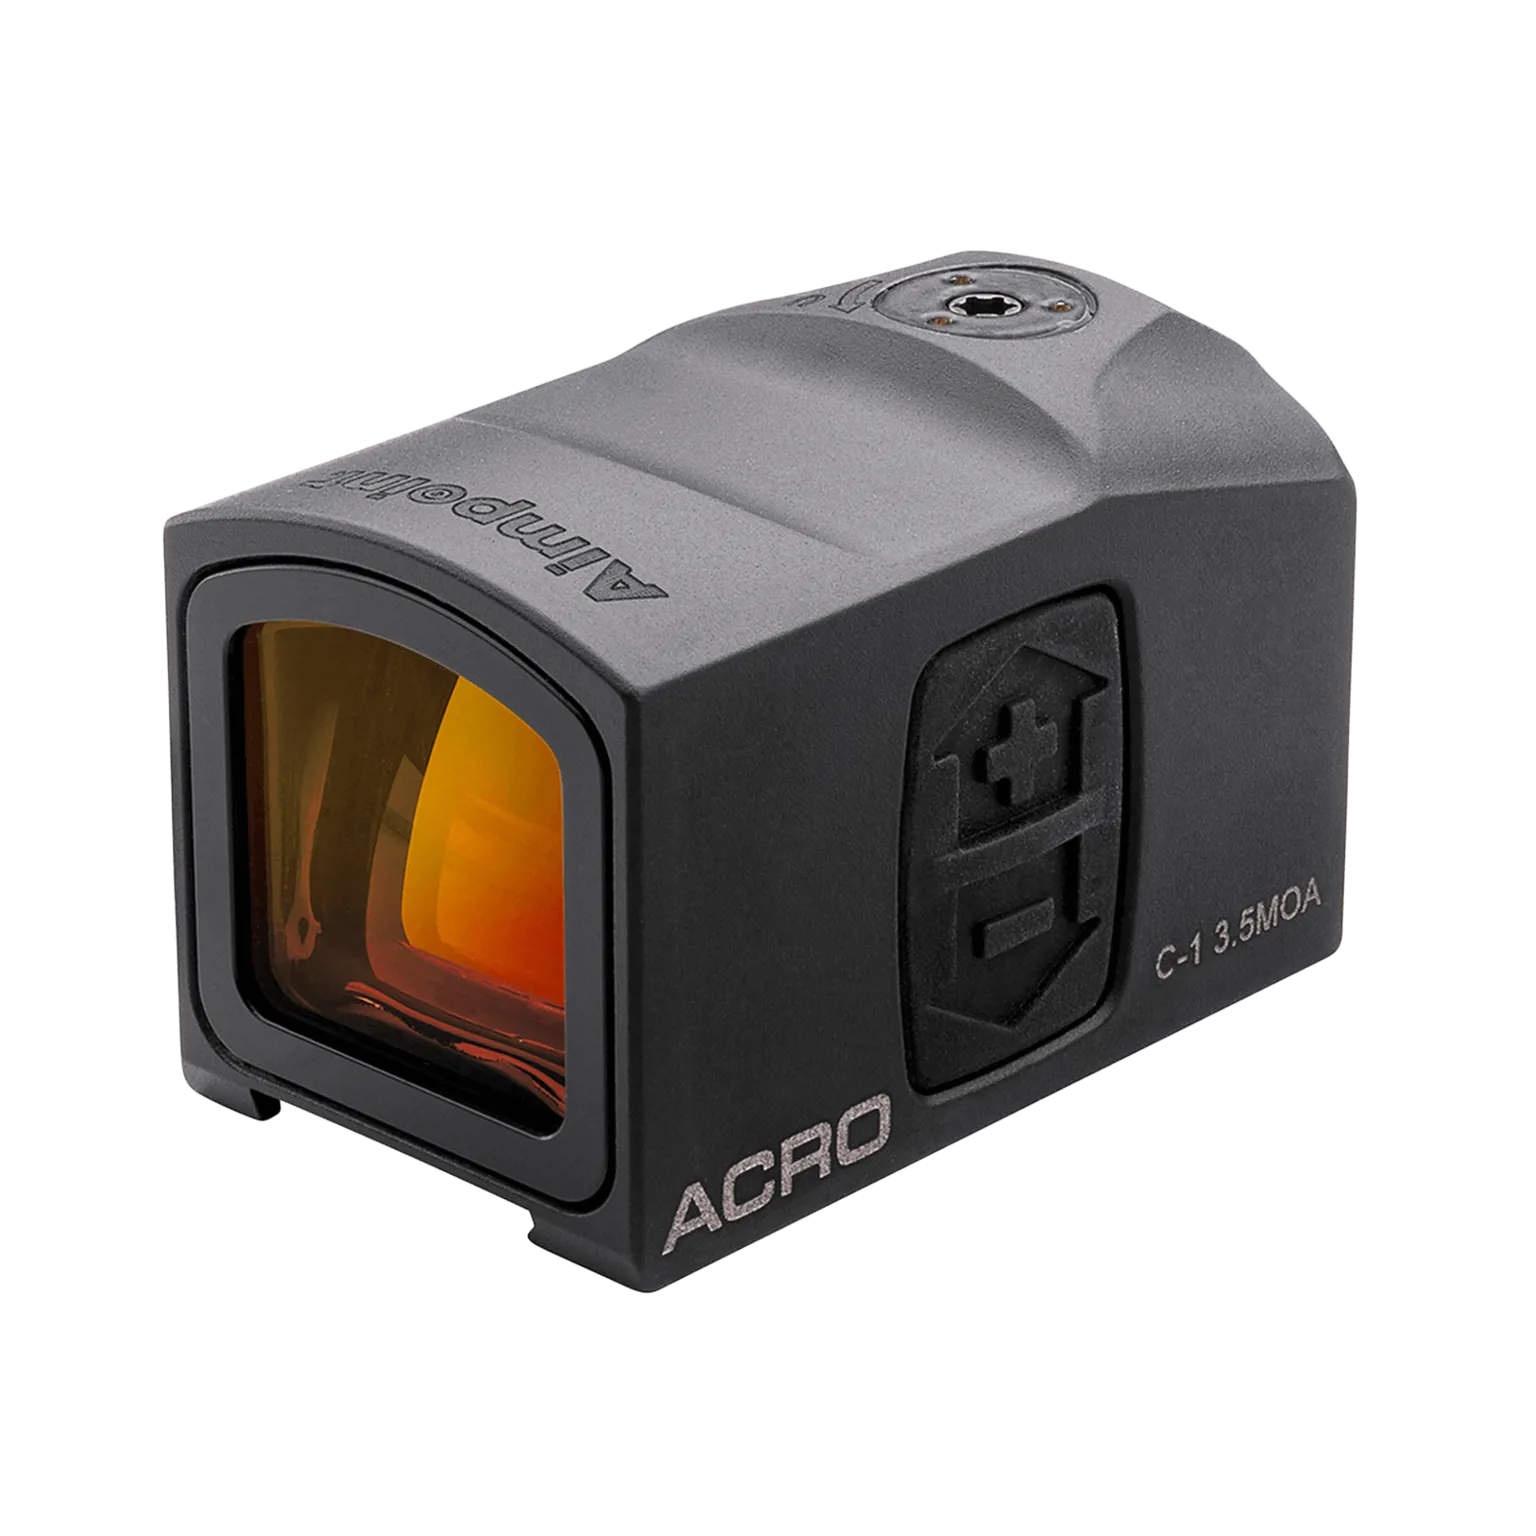 Acro C-1™ 3.5 MOA - Rotpunktvisier mit Integrierte Acro™ Schnittstelle - 1